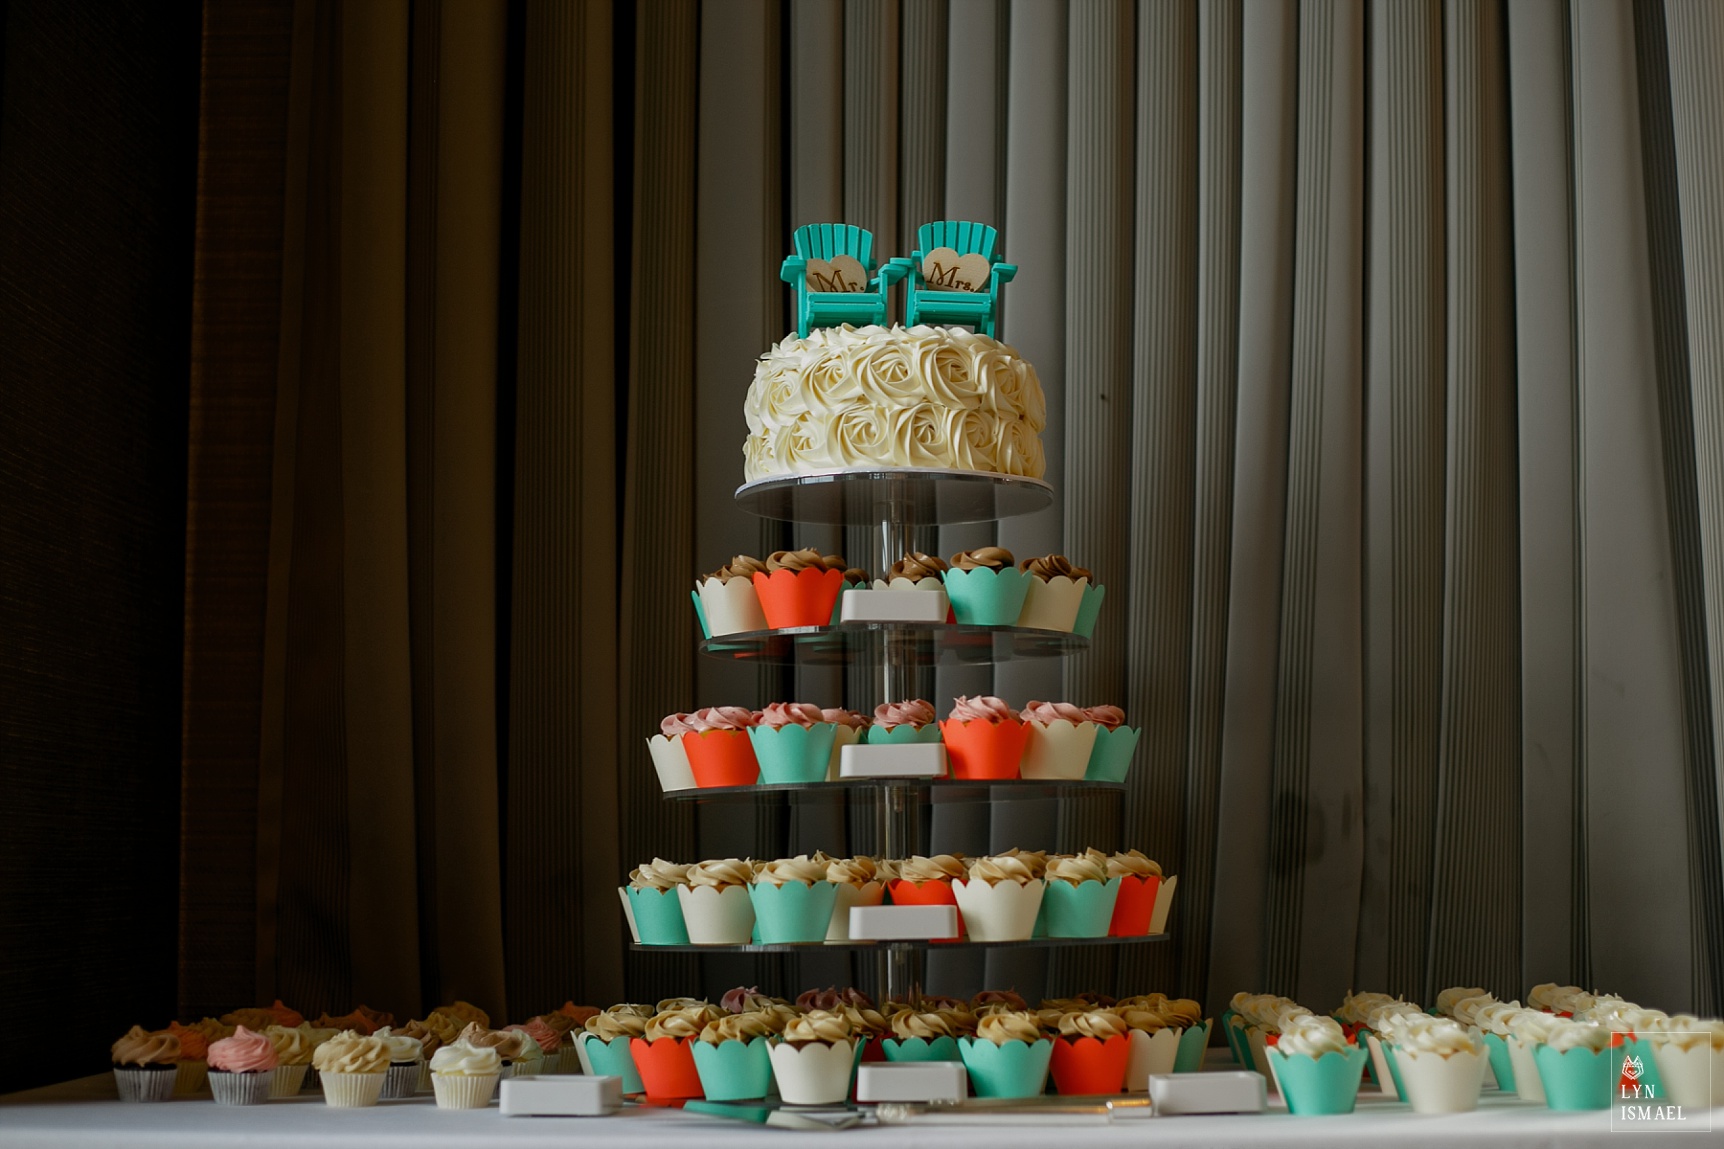 Cupcakes instead of wedding cake